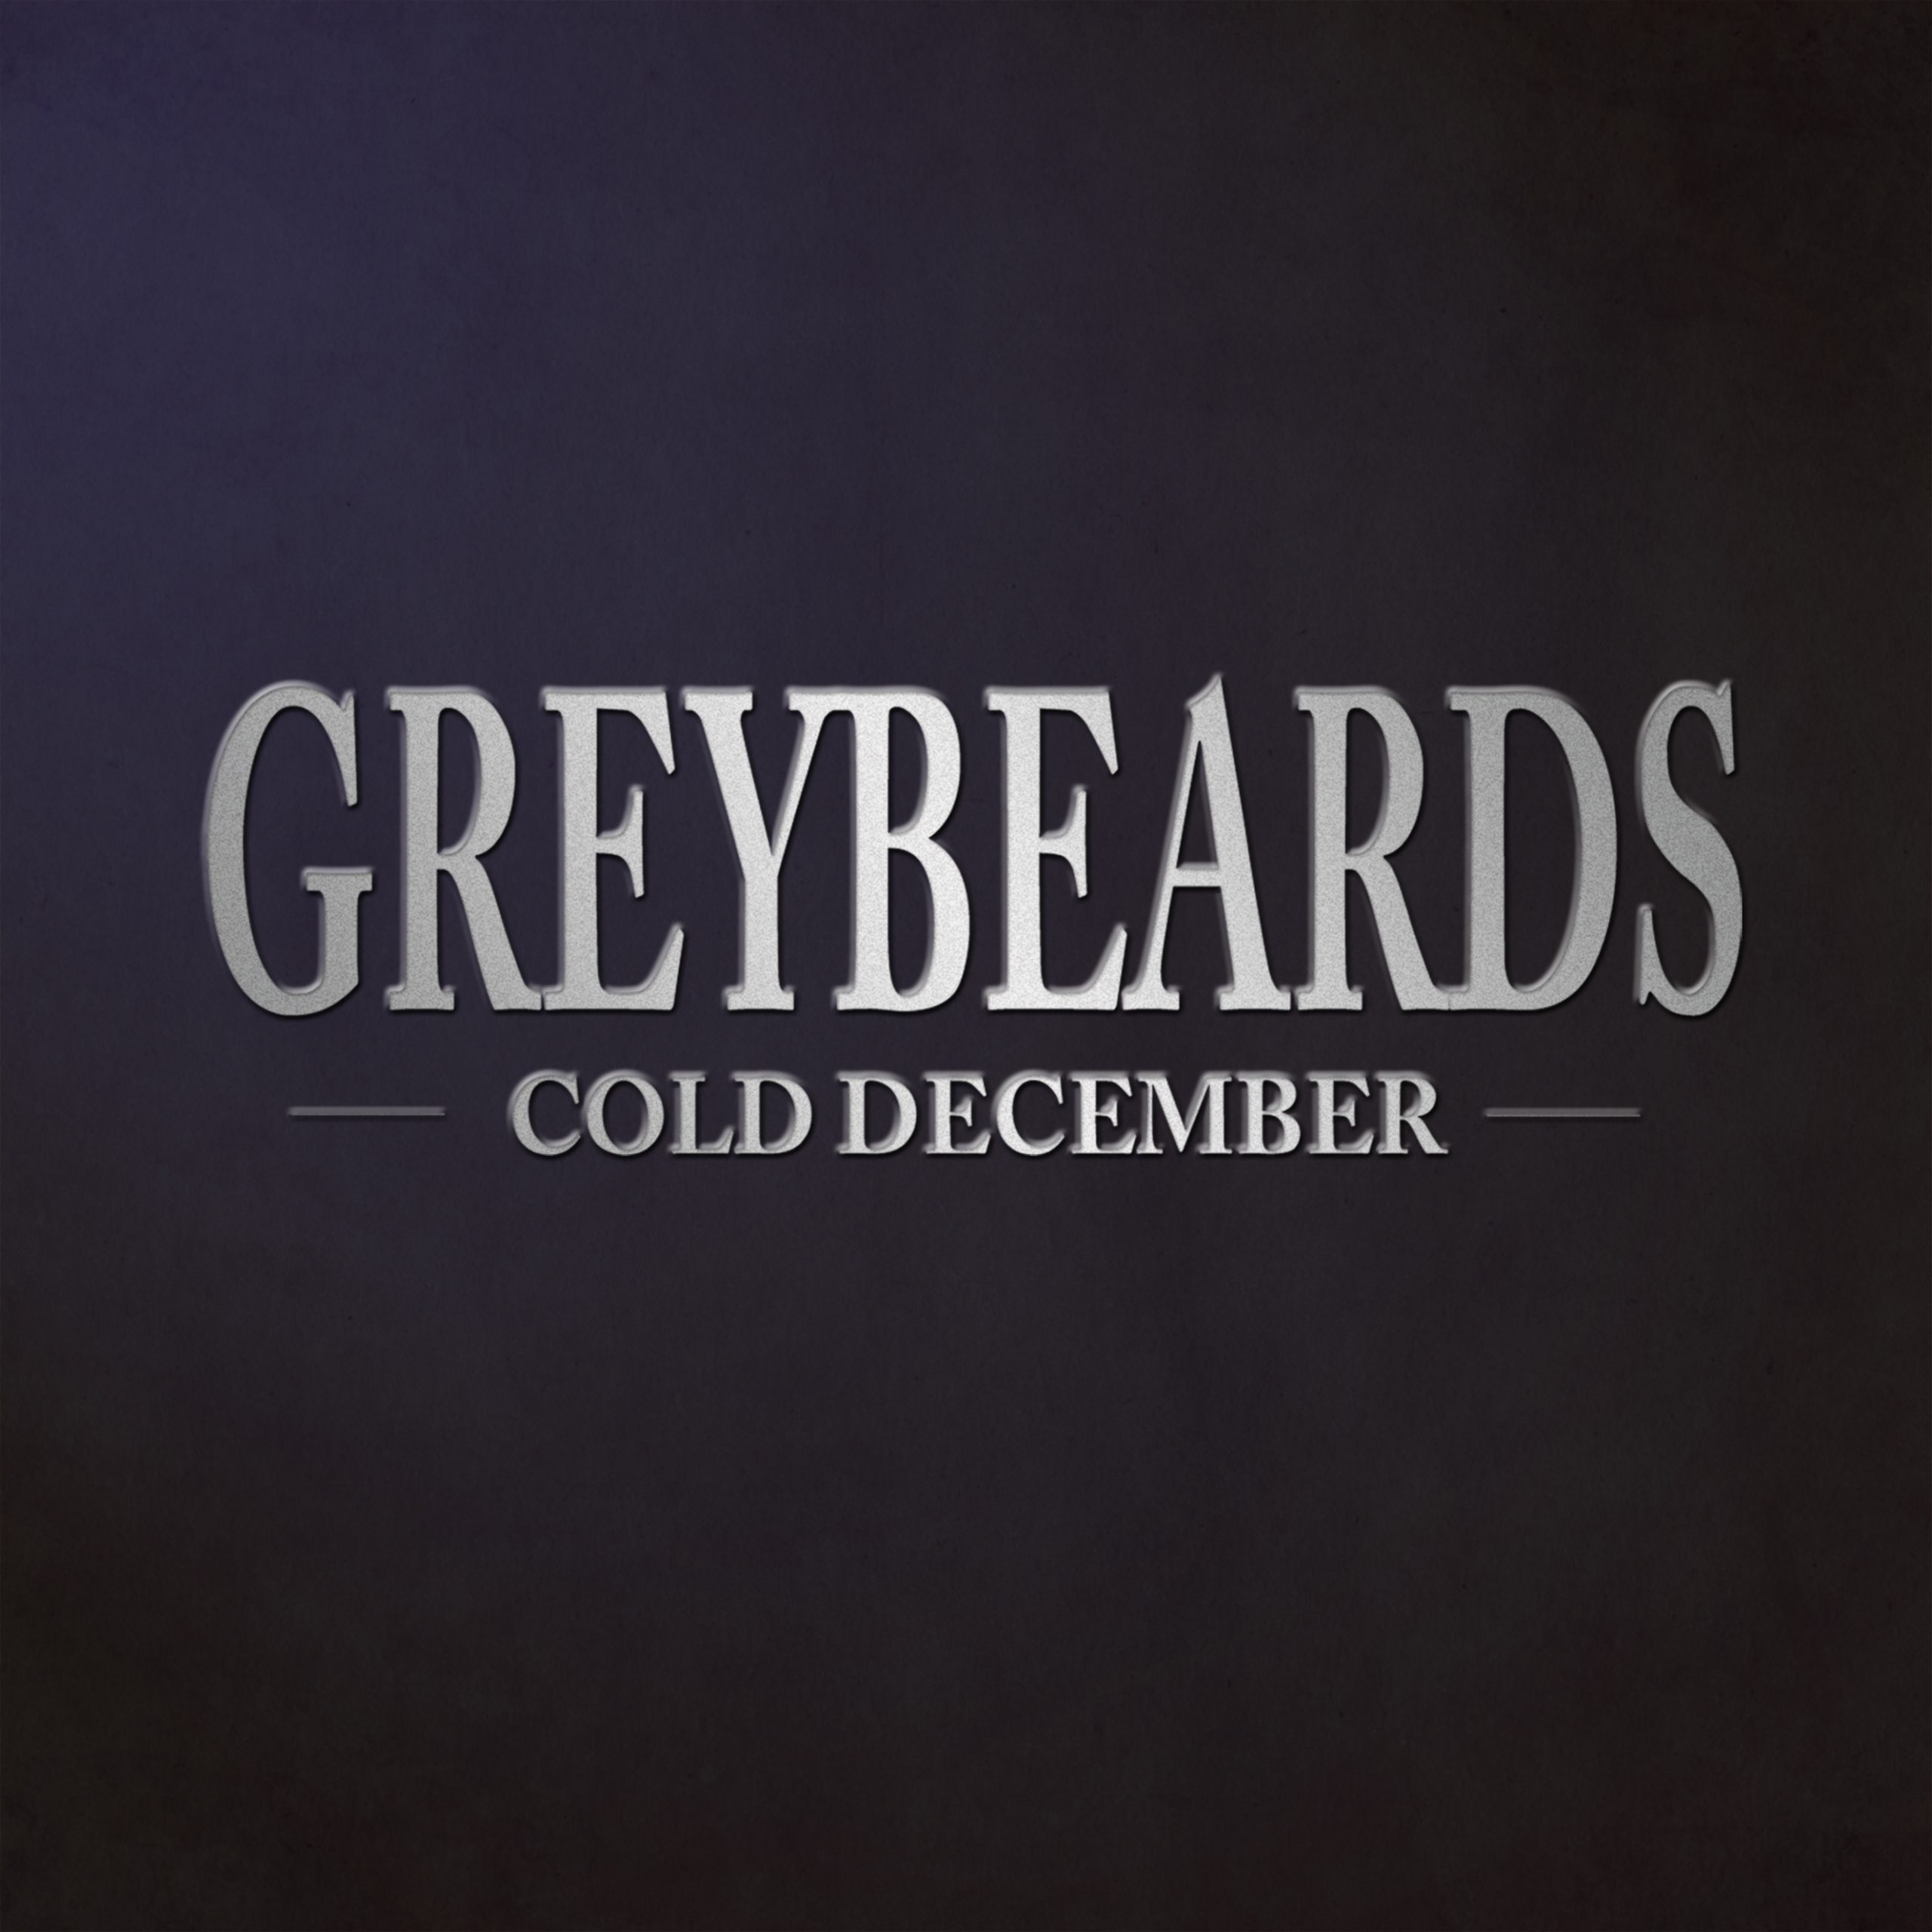 Greybeards. Cold december